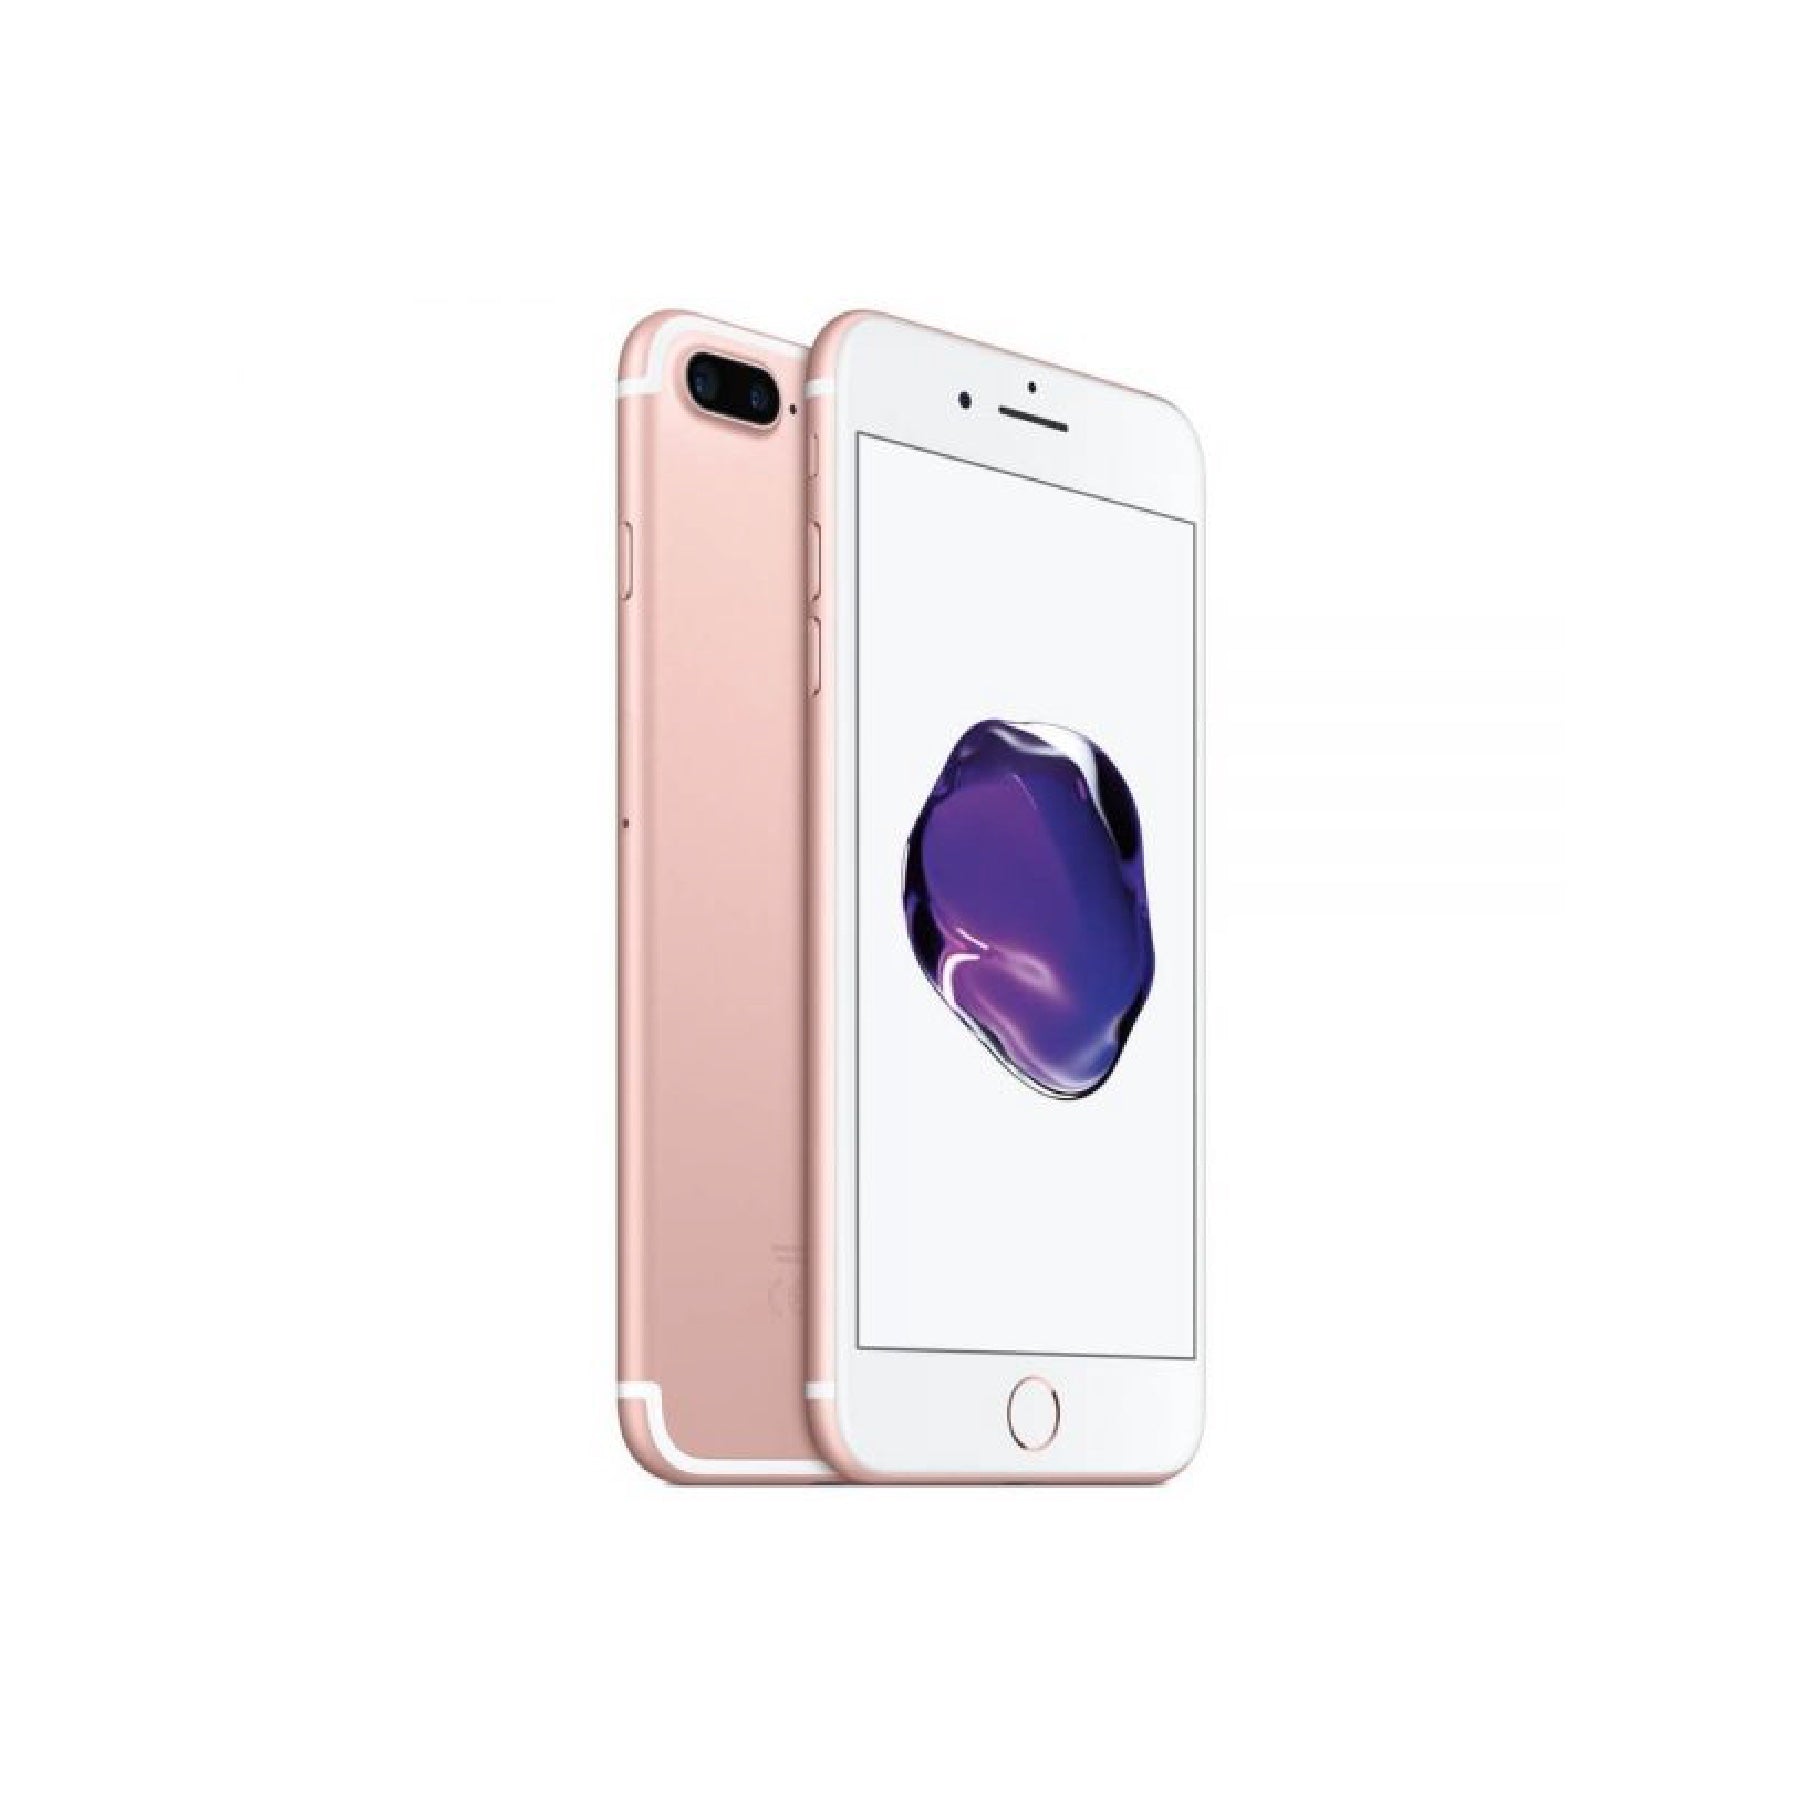 Buy Used iPhone 7 Plus 32GB Rose Gold (Good) iStore